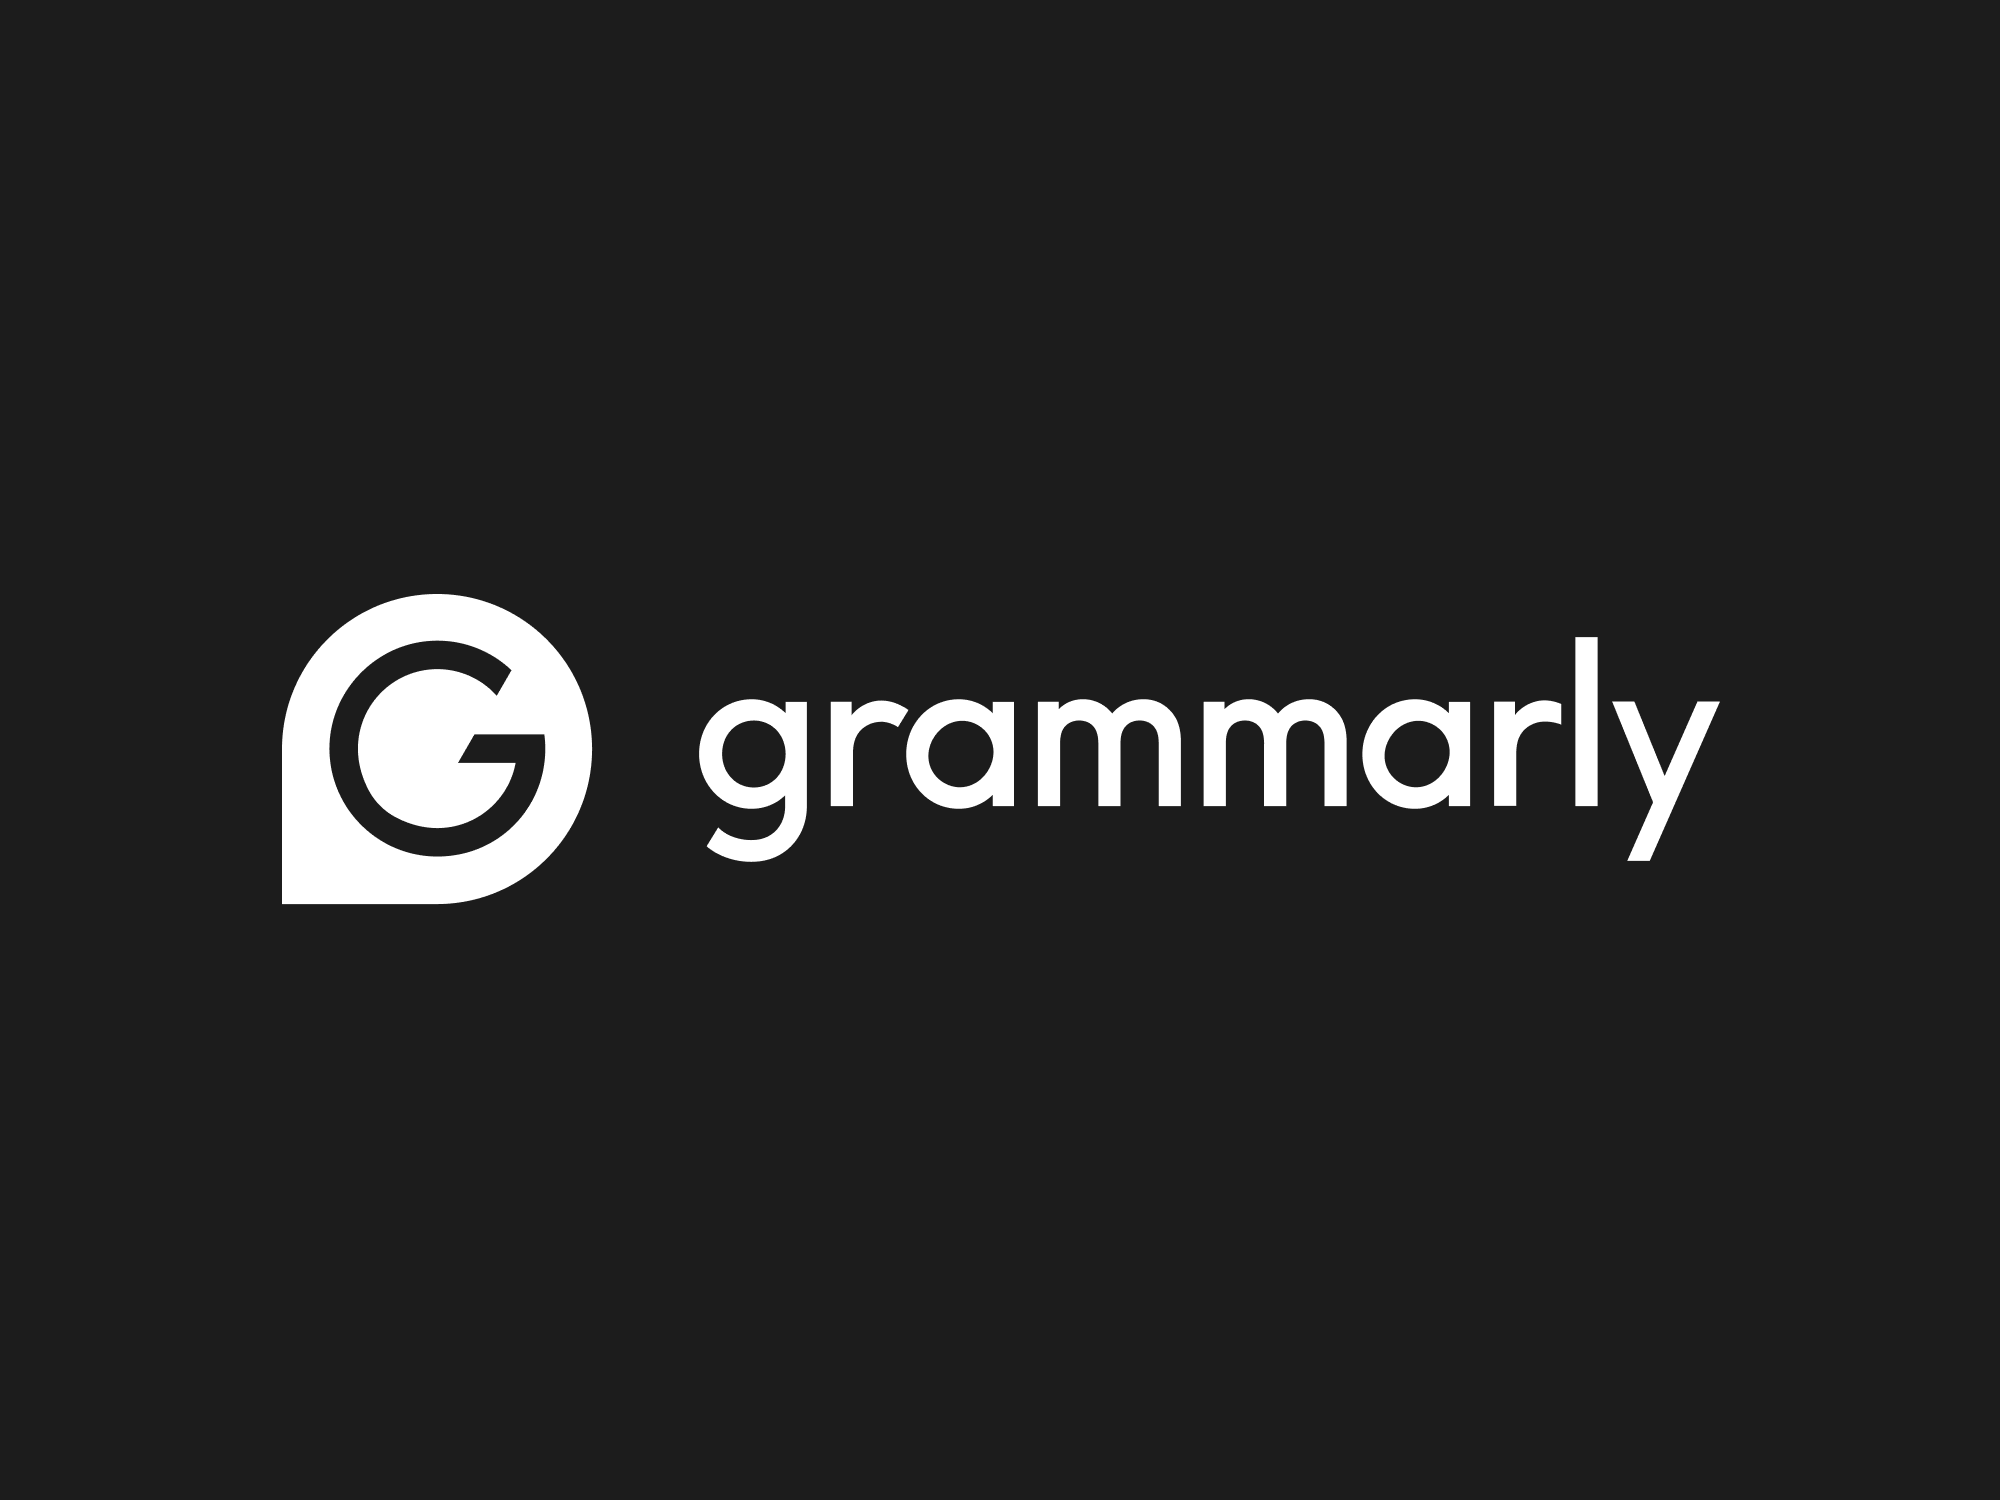 Grammarly website logo.png